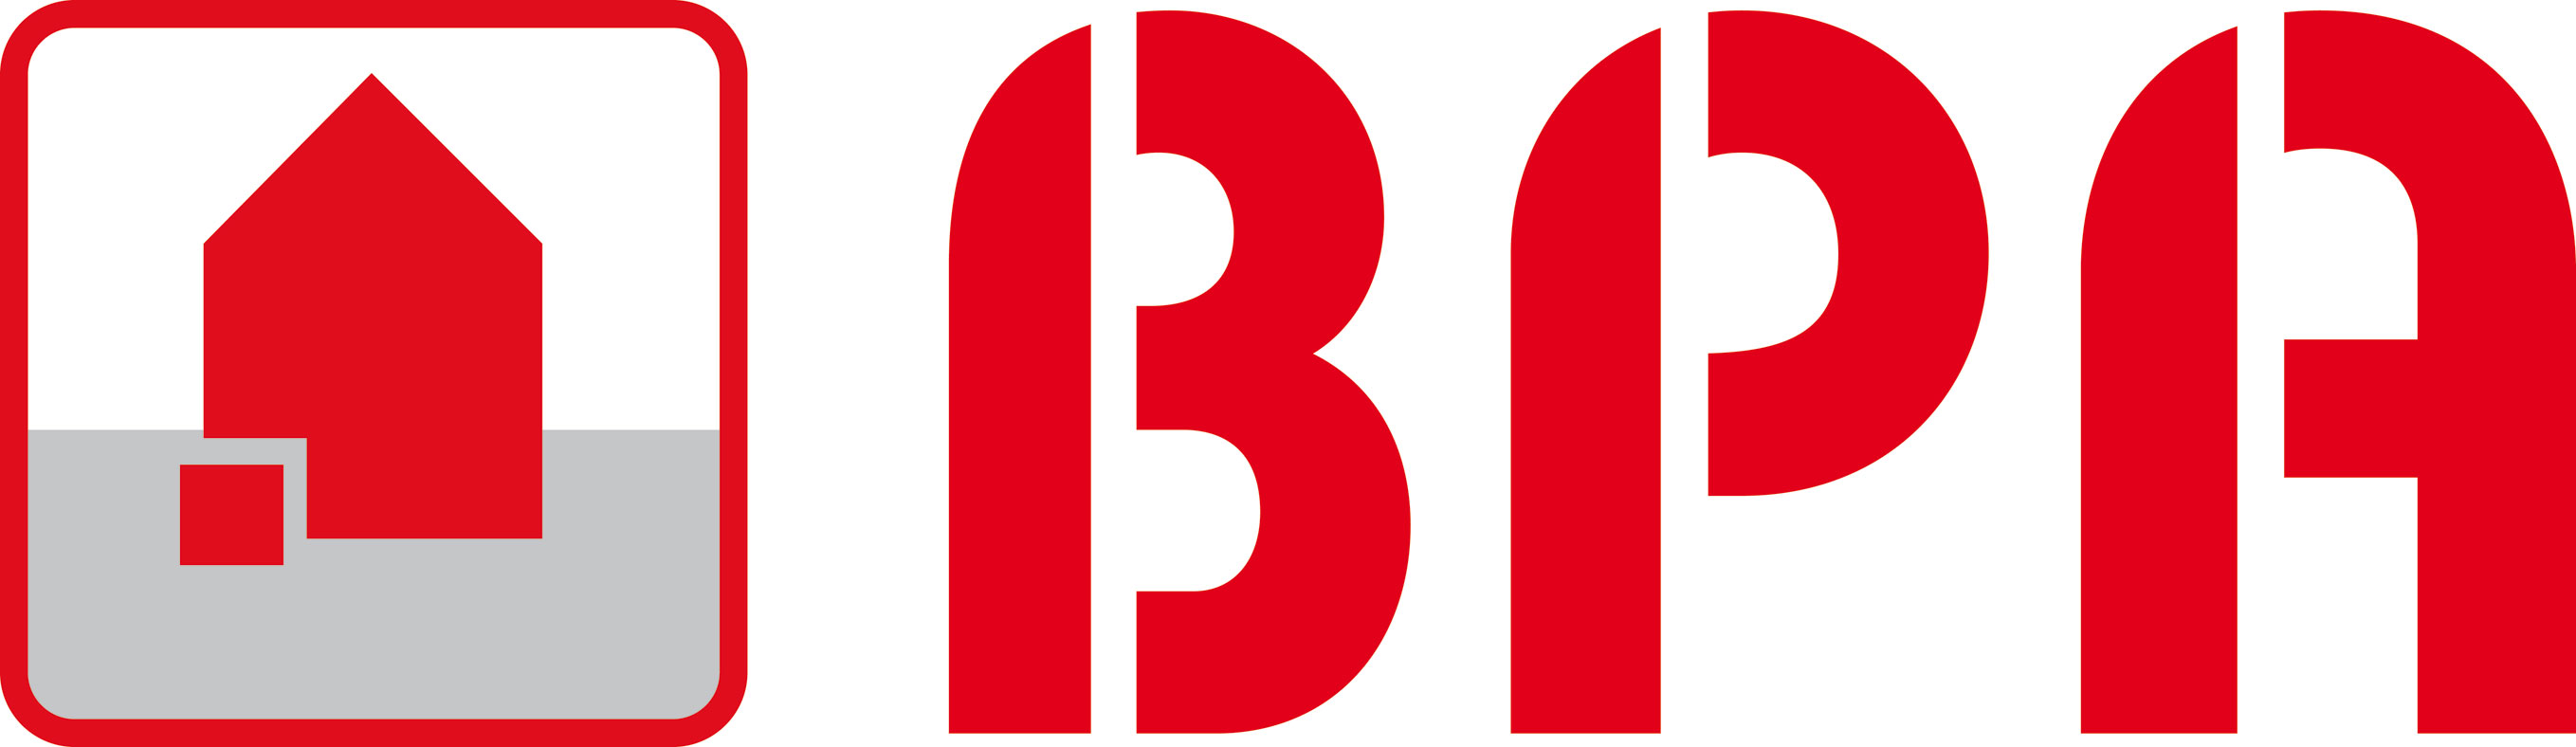 009_BPA_GmbH_Herrenberg_logo